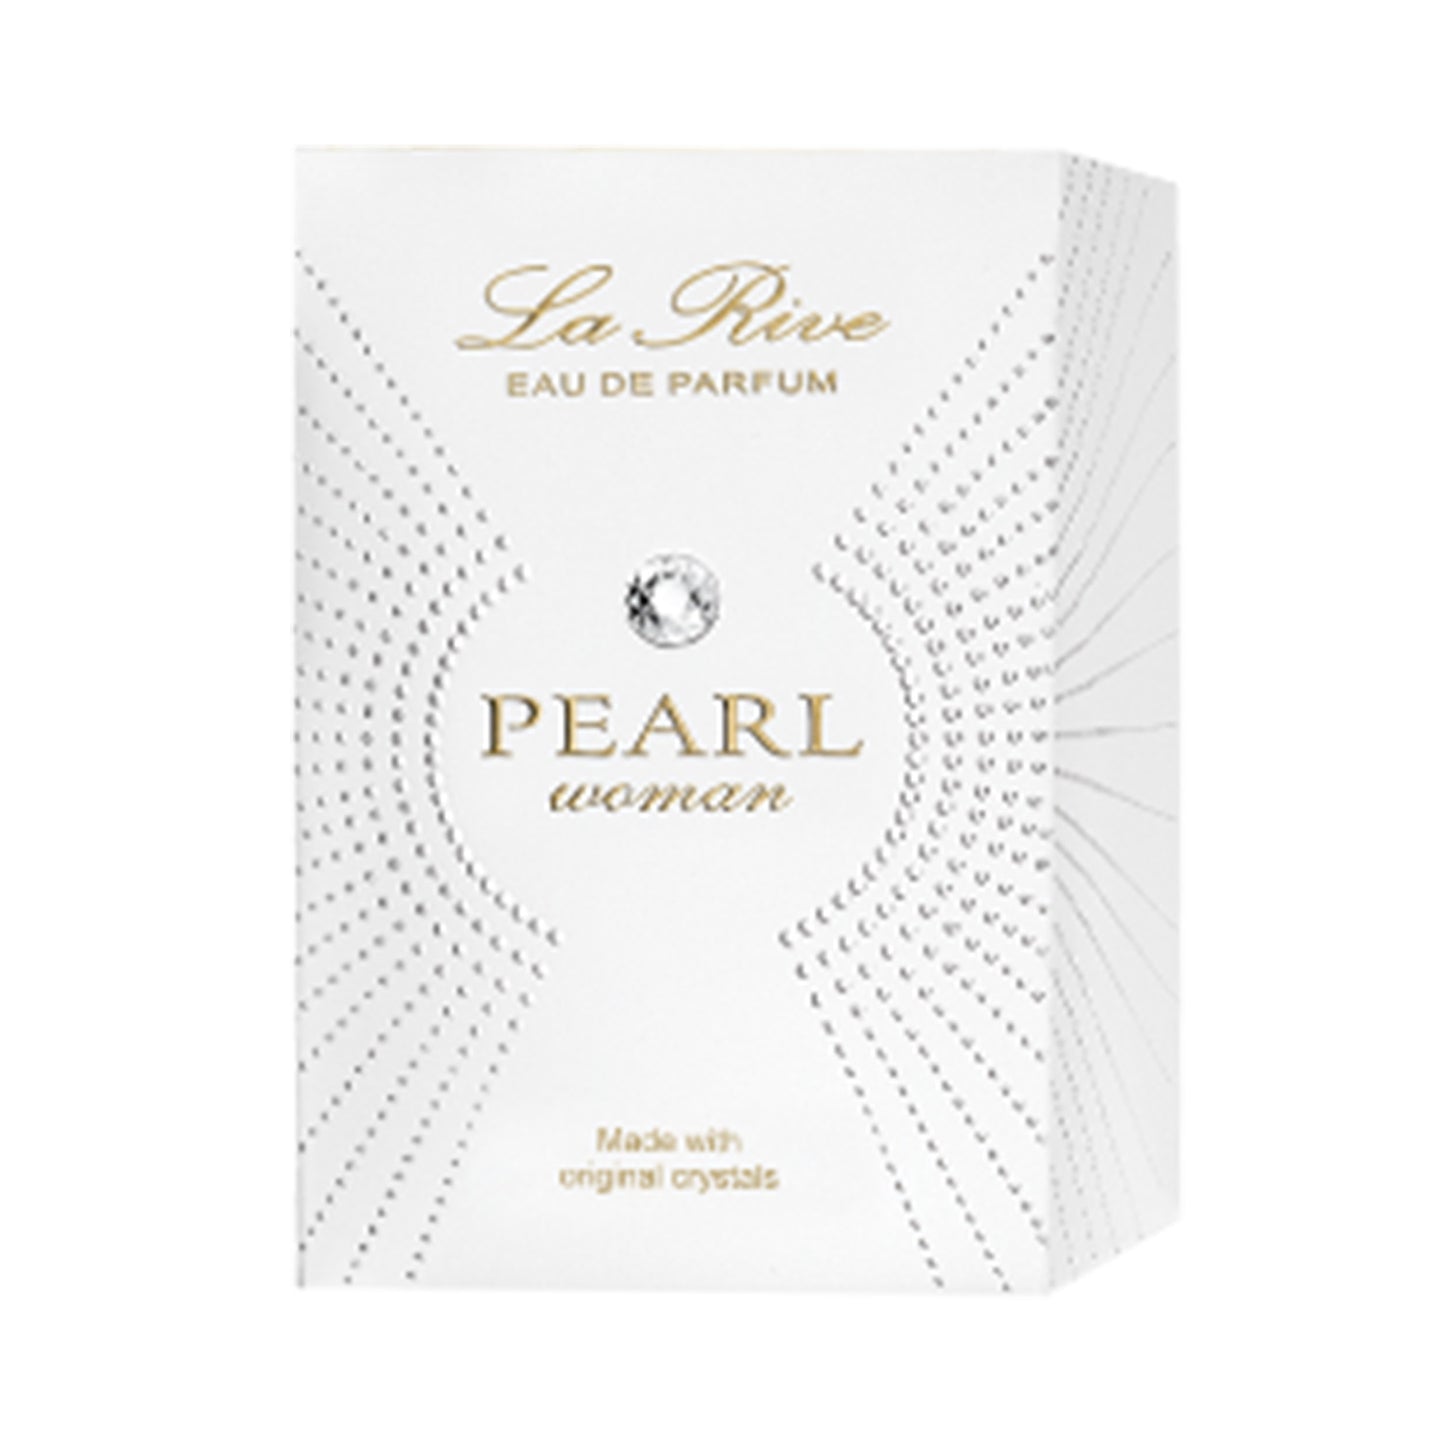 LA RIVE PEARL WOMAN EAU DE PARFUM 75ML - fruity floral woody